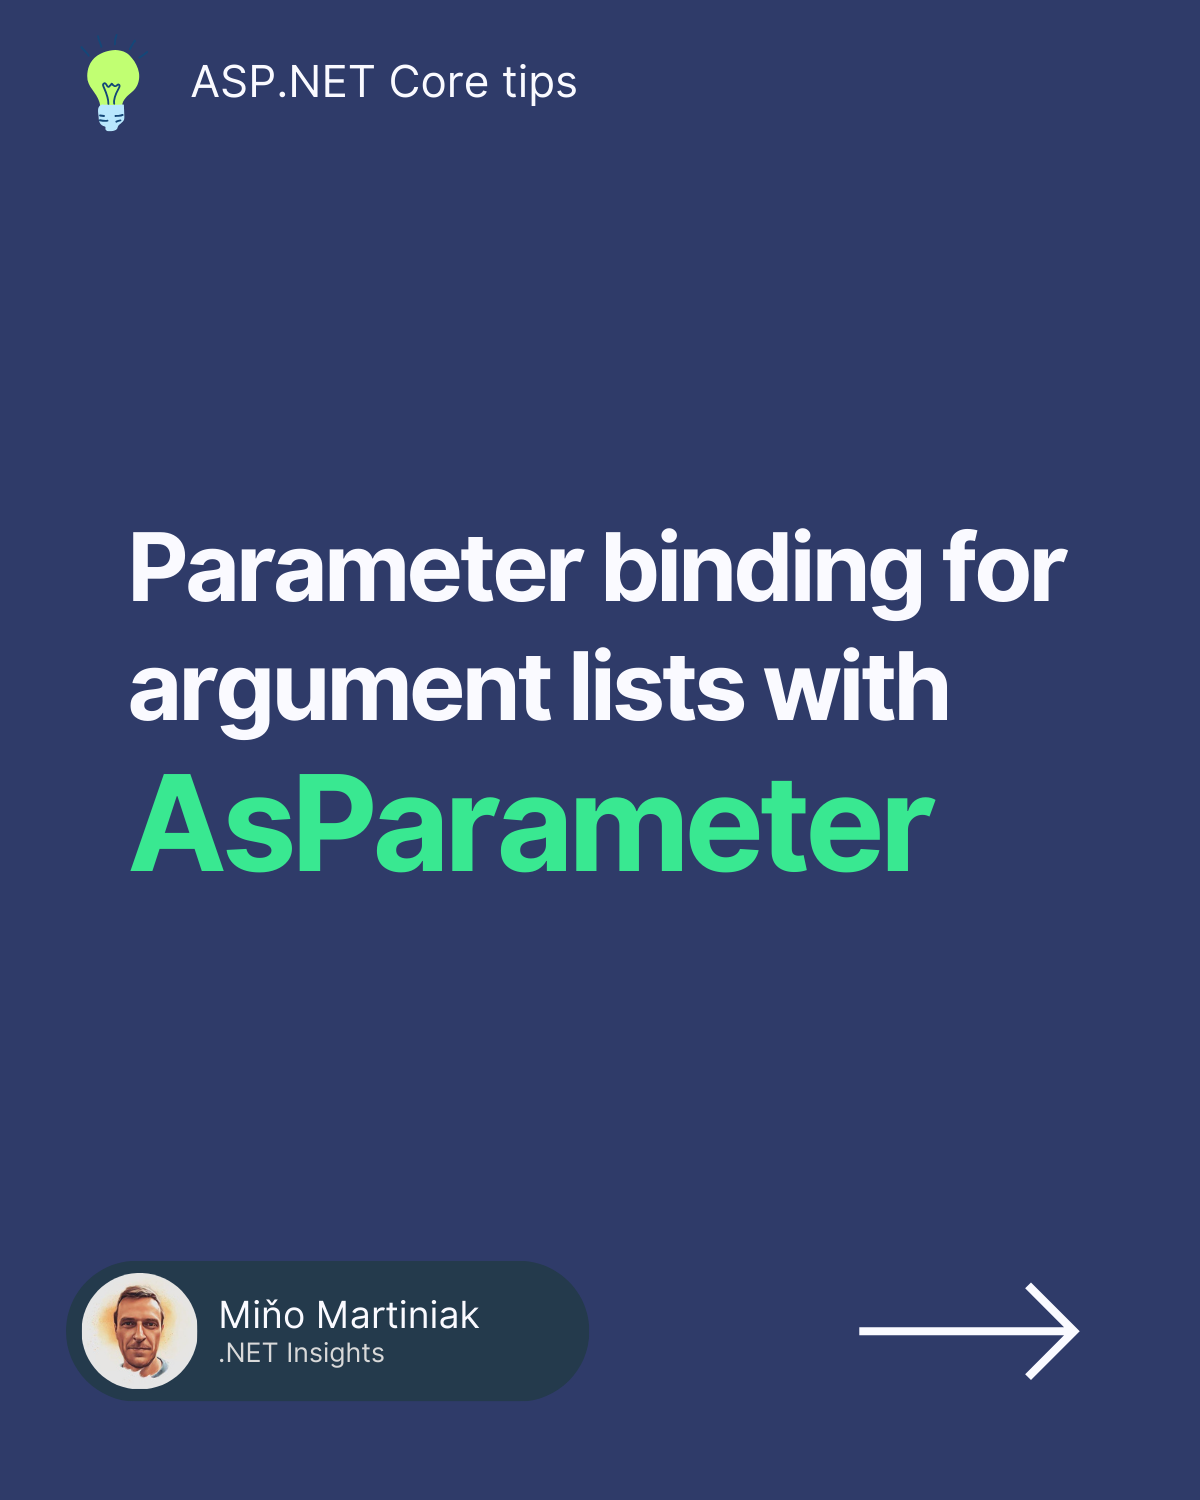 ASP.NET Core - Bind with asparameter